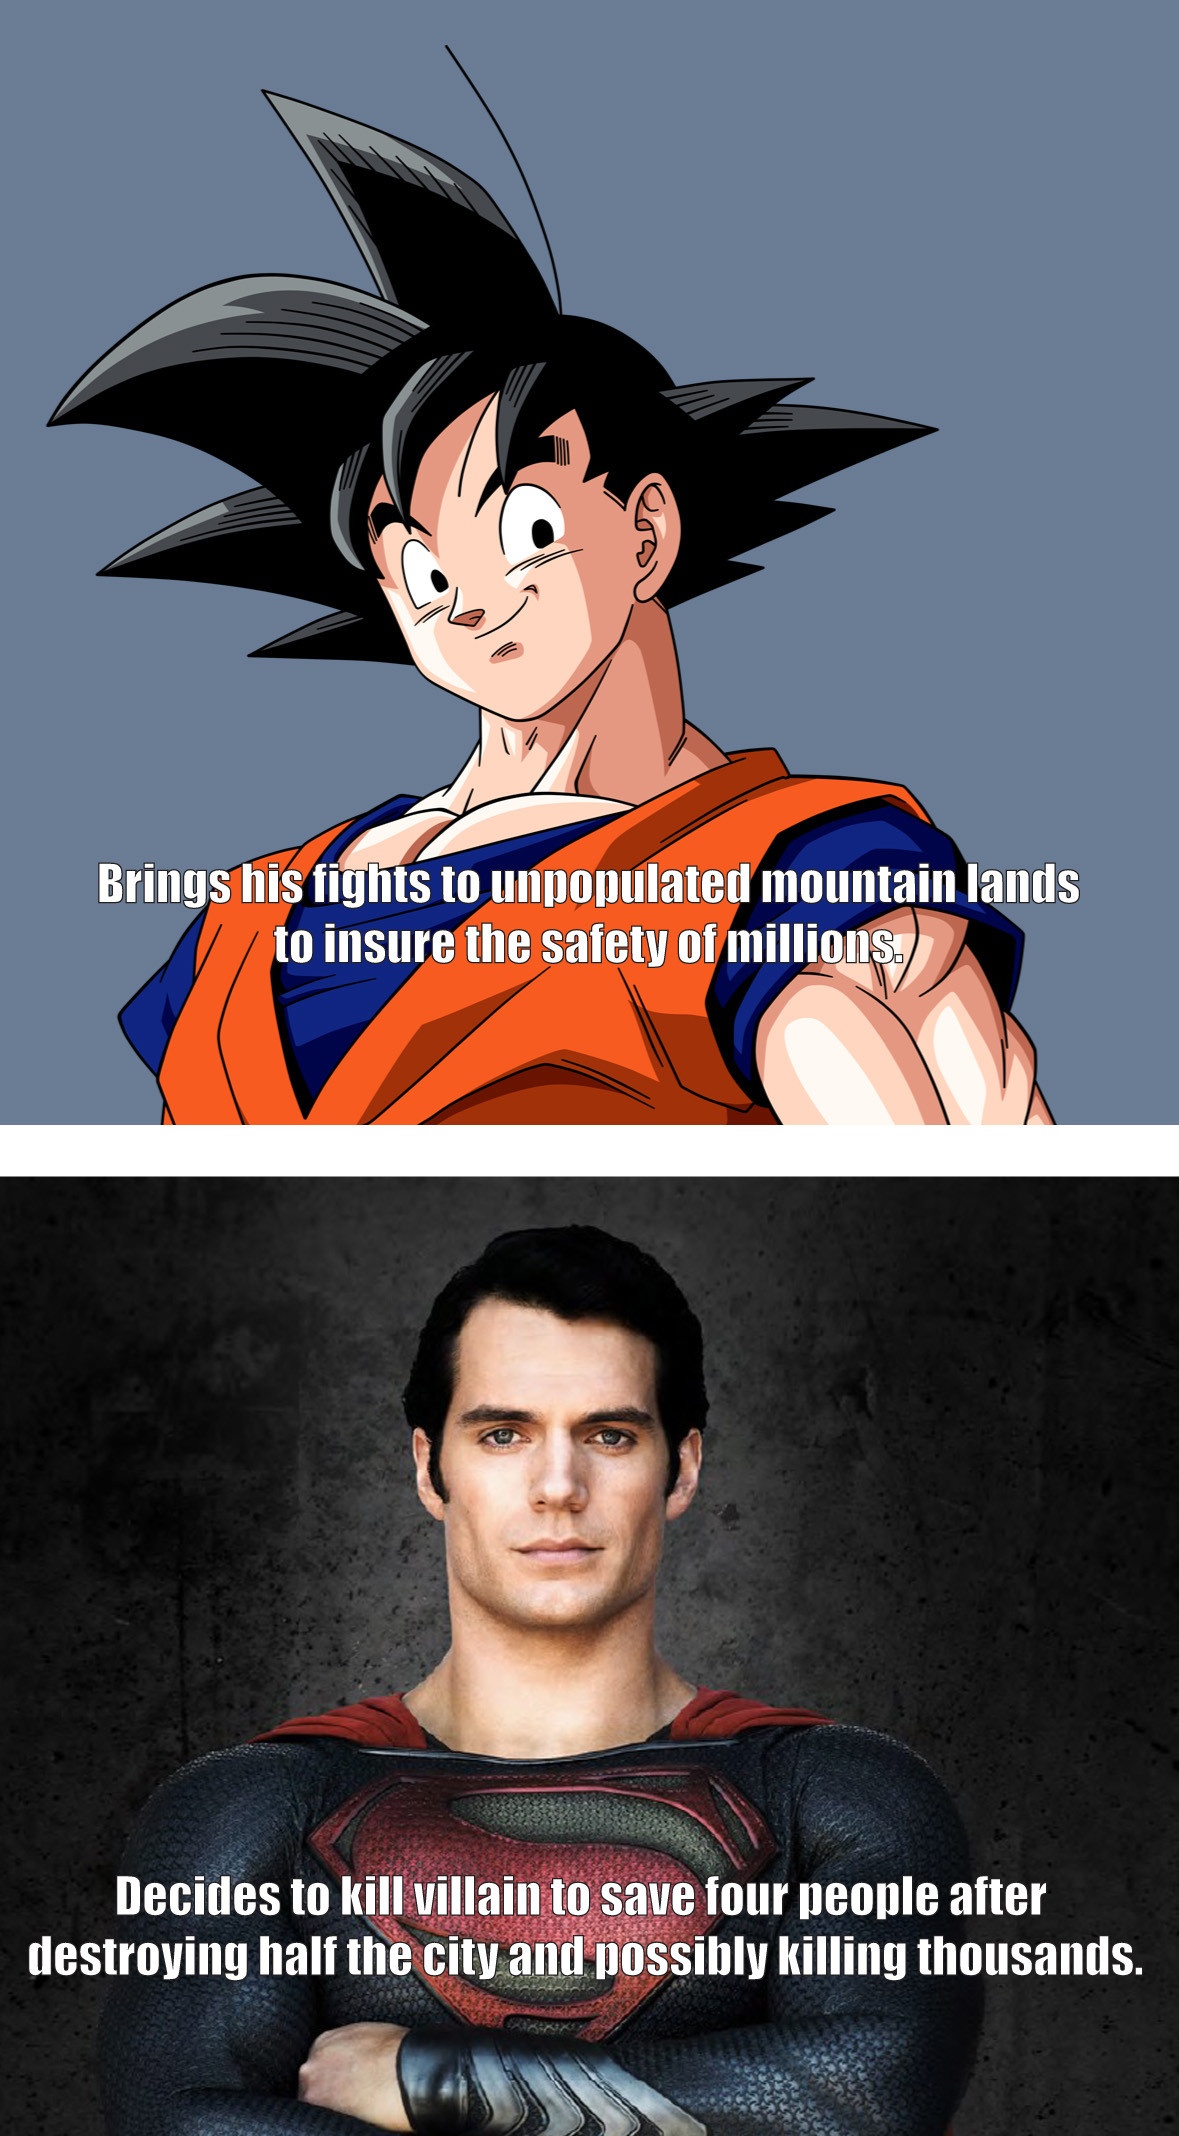 Epic Superman vs Goku Memes